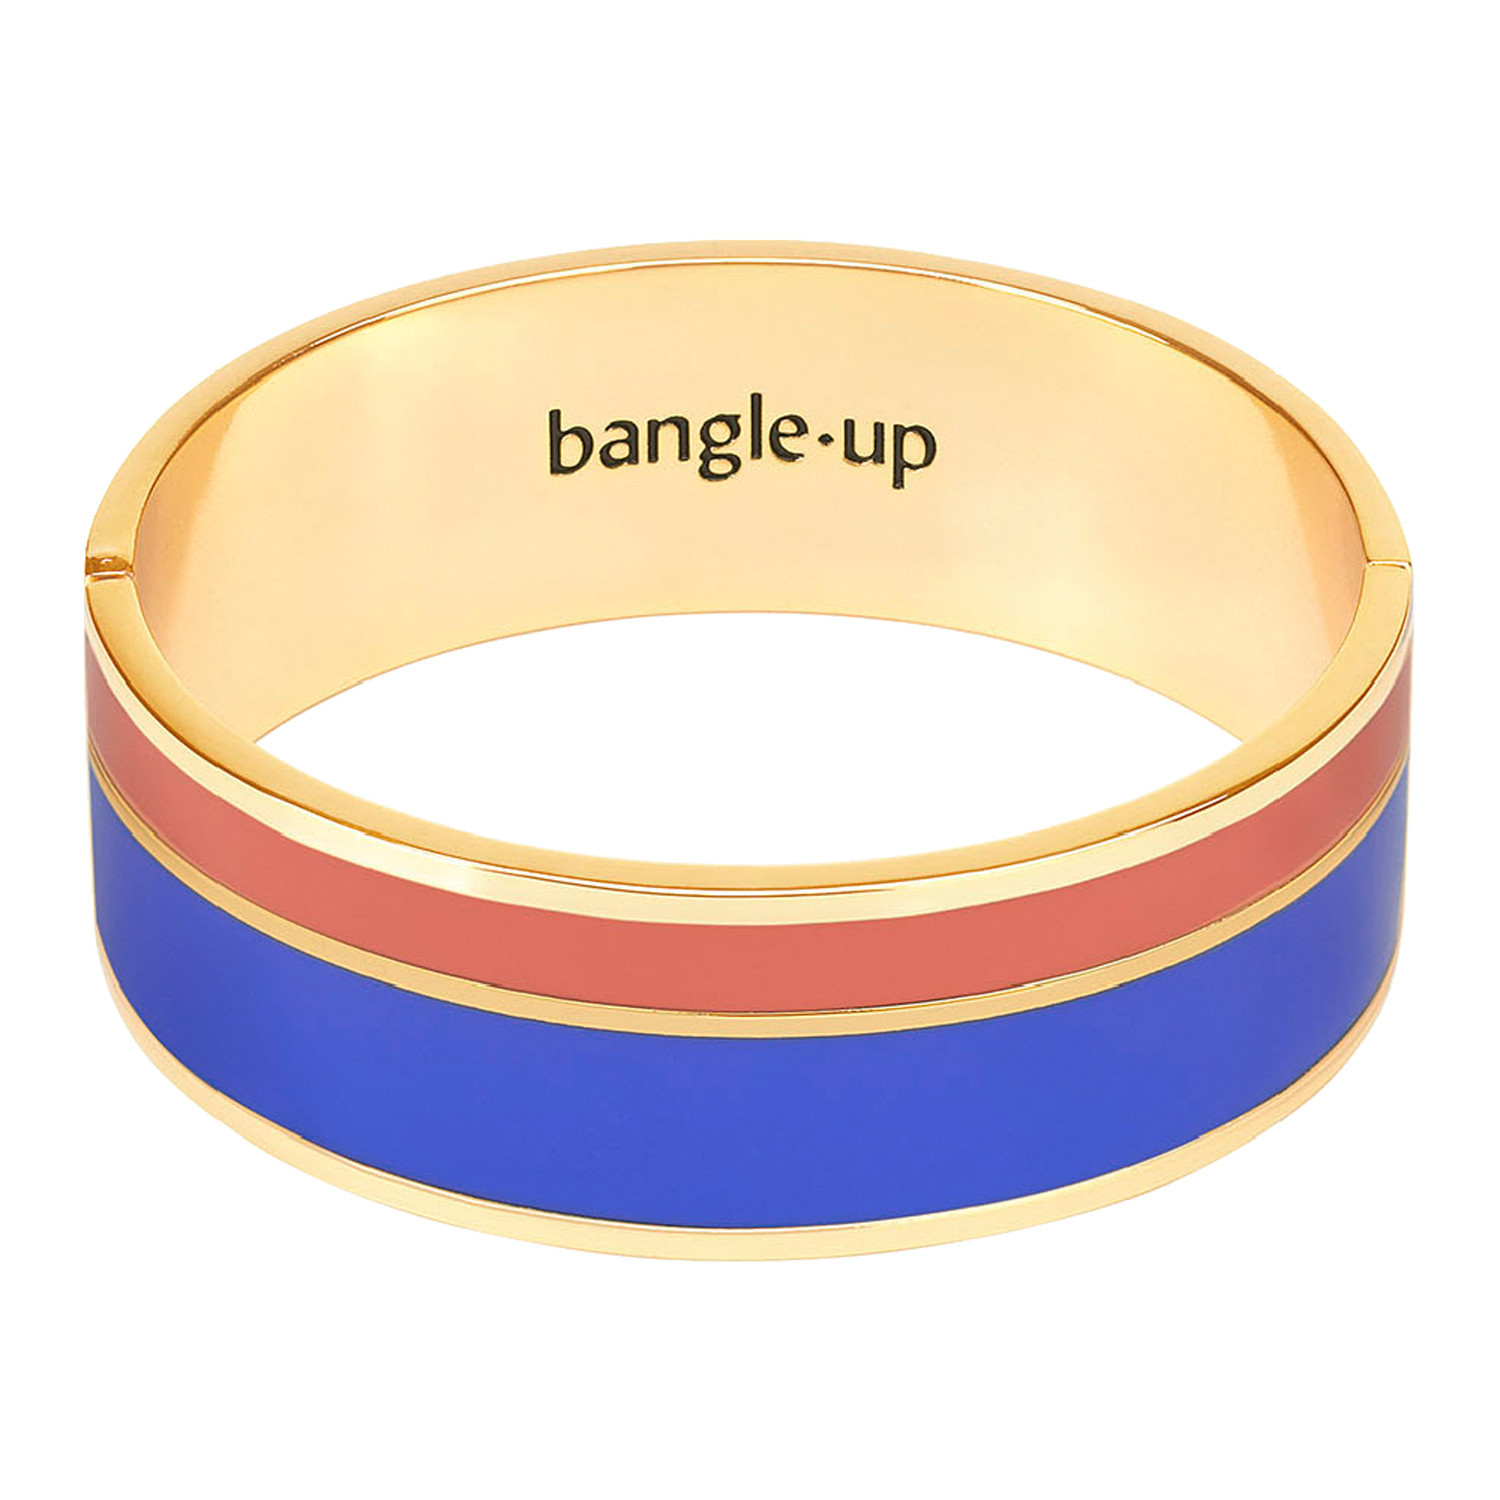 Bracelet jonc Bangle Up Vaporette bleu/orange
taille 2